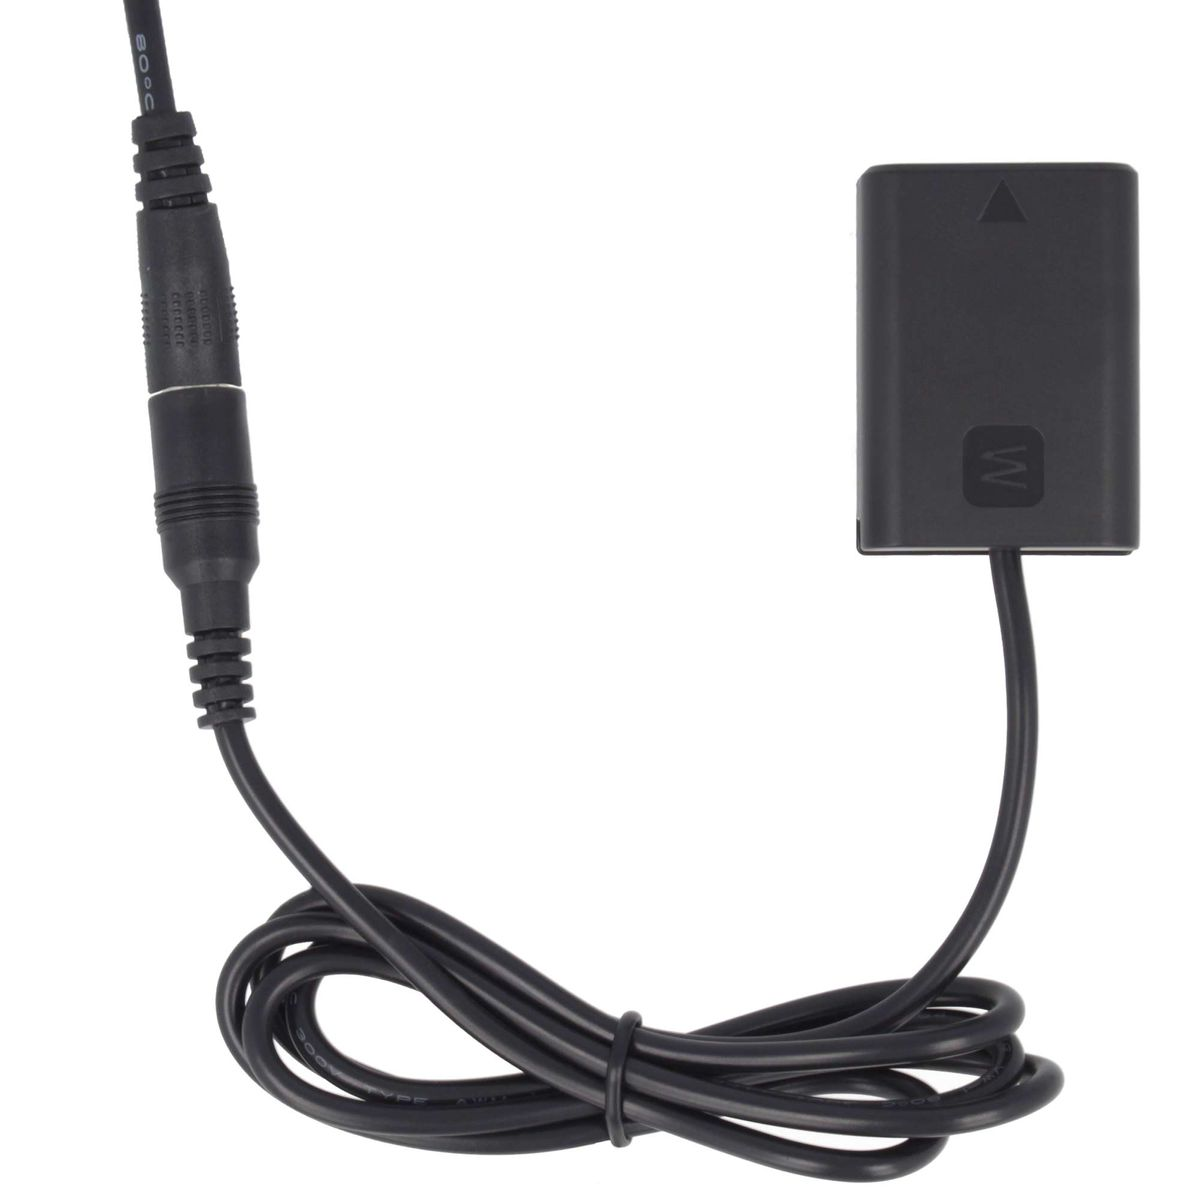 Adapter Angabe mit Sony, Sony Ladegerät AC-PW20 kompatibel + keine USB-C Kuppler AKKU-KING